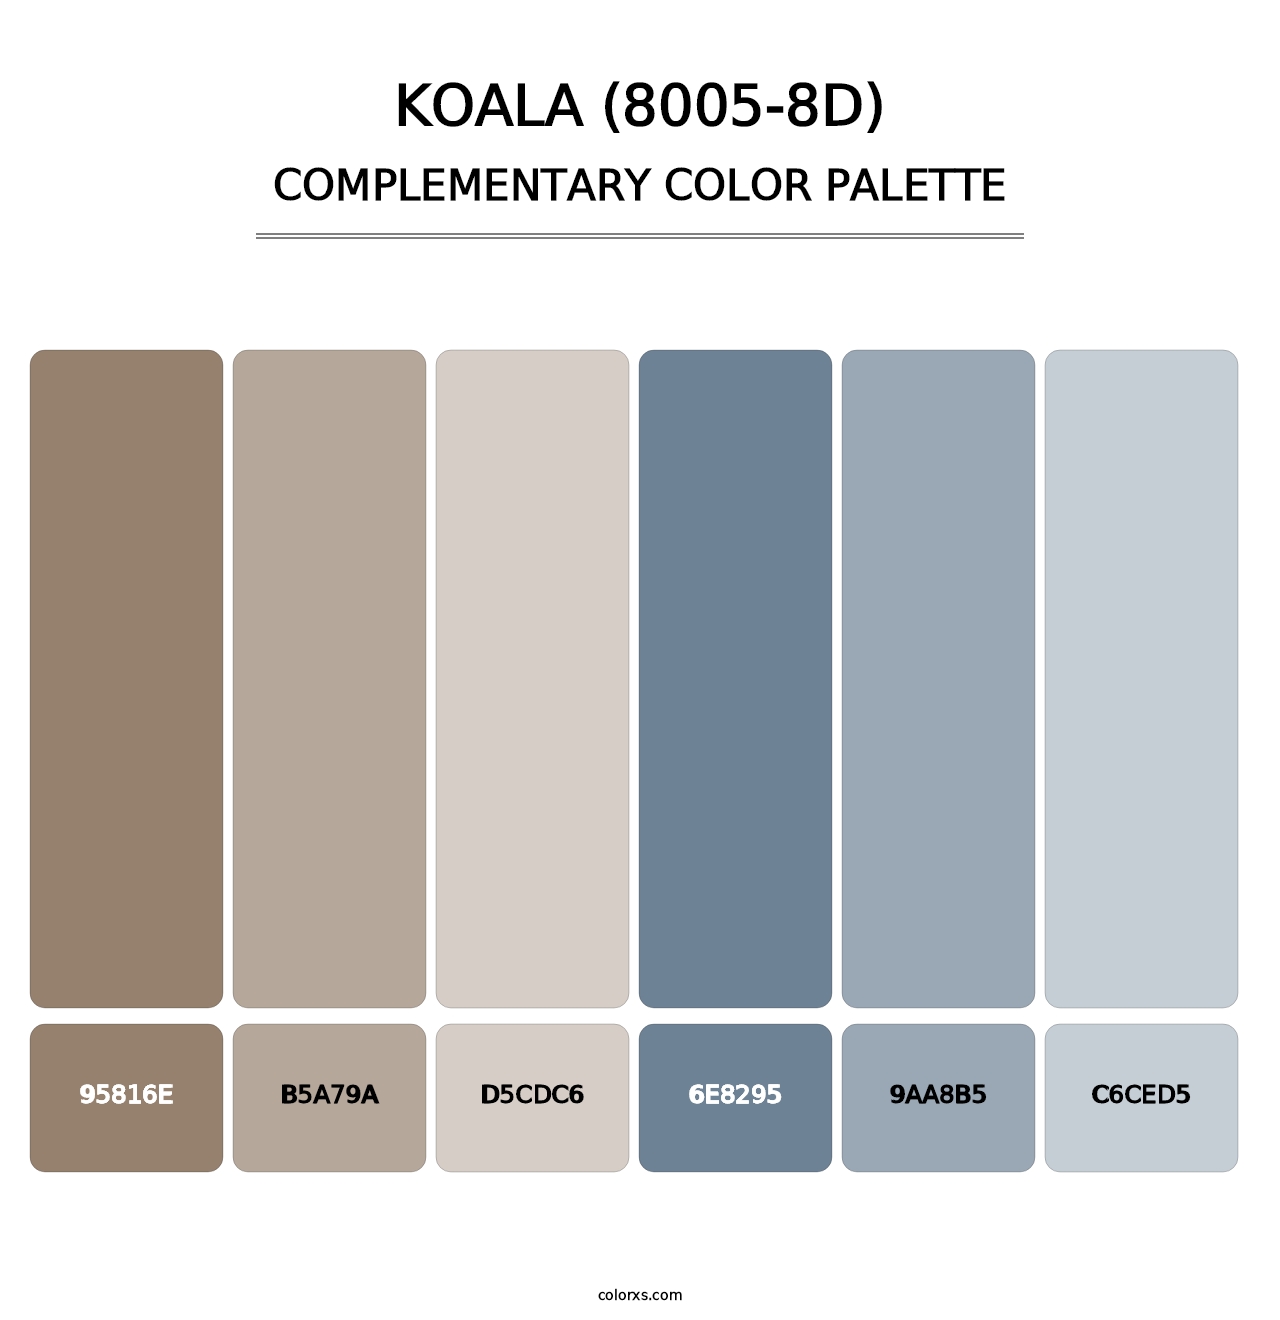 Koala (8005-8D) - Complementary Color Palette